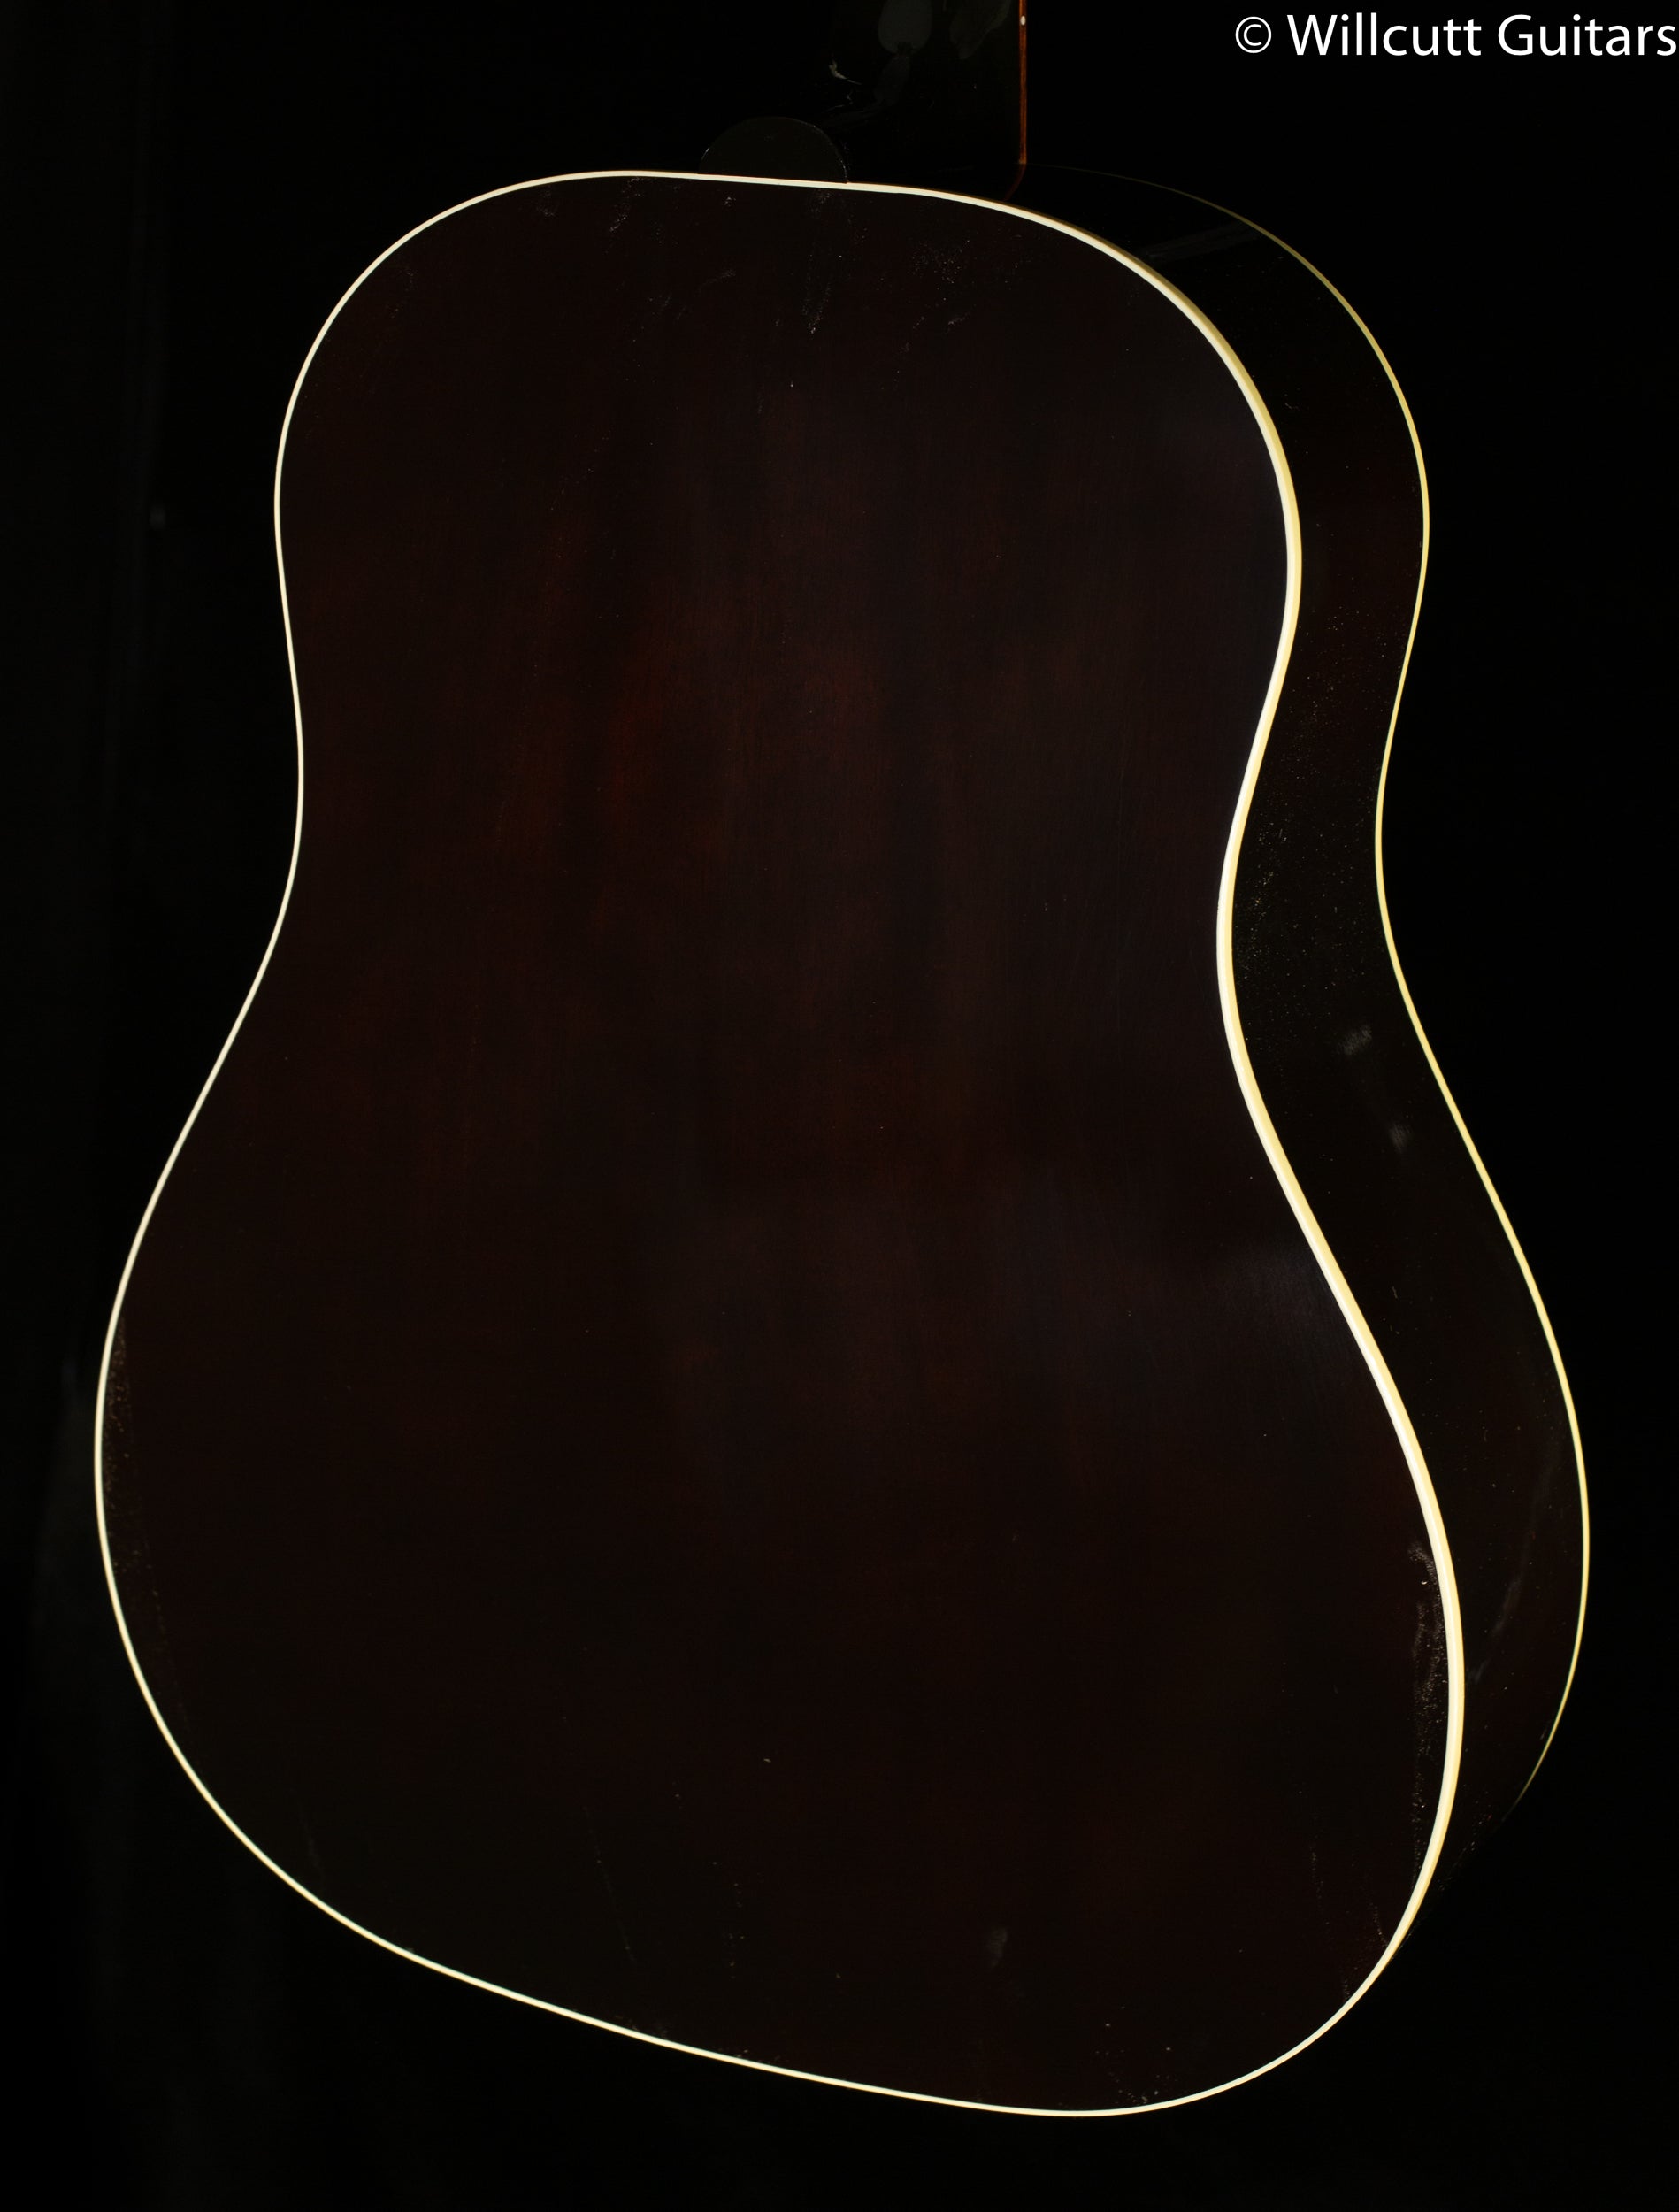 Gibson Custom Shop Willcutt Exclusive J-45 Standard Vintage 